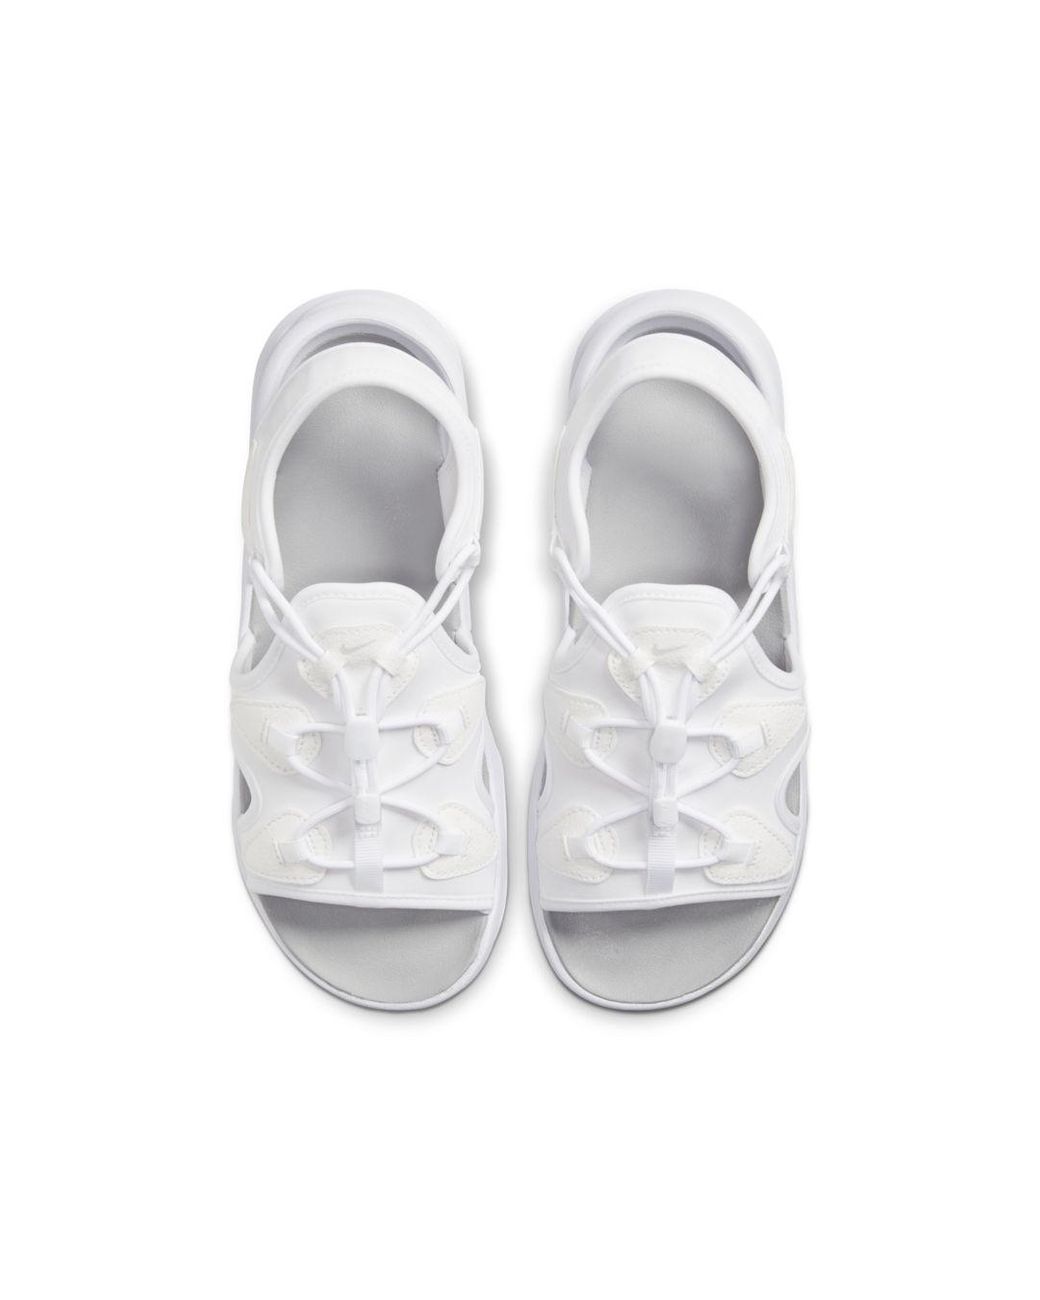 Nike Air Max Koko Sandal in White | Lyst